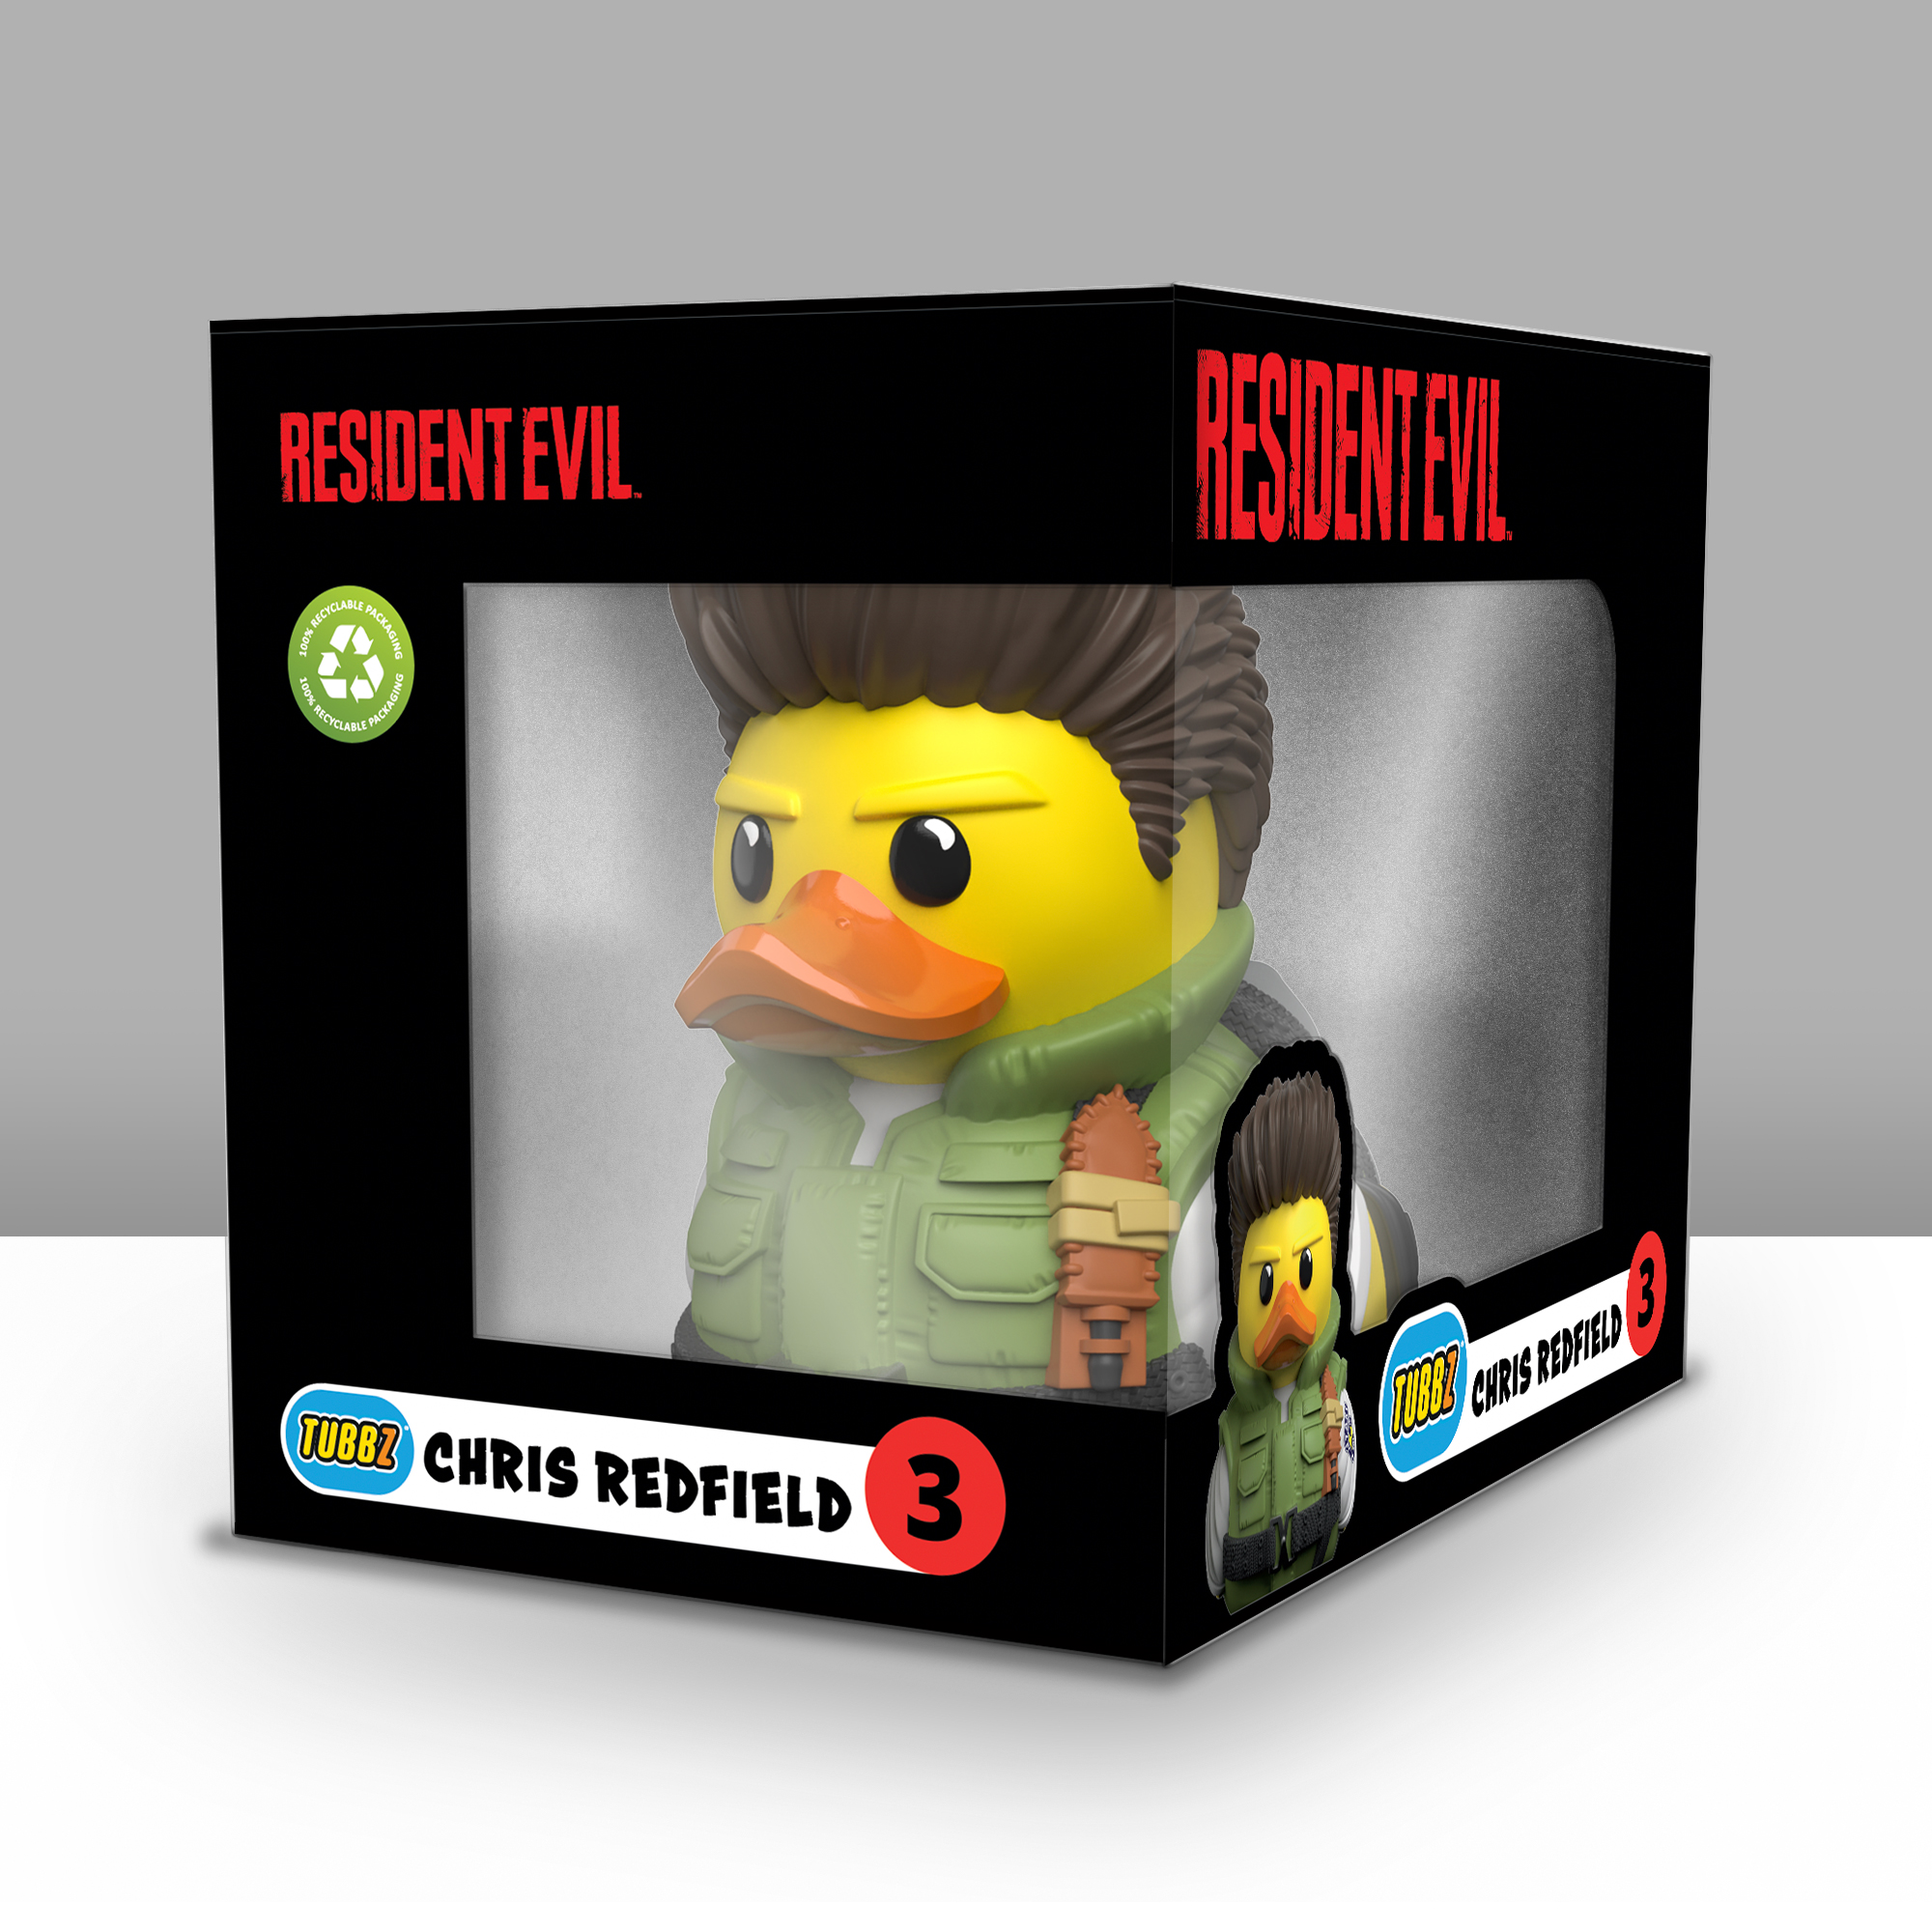 [Pre-order] TUBBZ BOX EDITION "Resident Evil" Chris Redfield